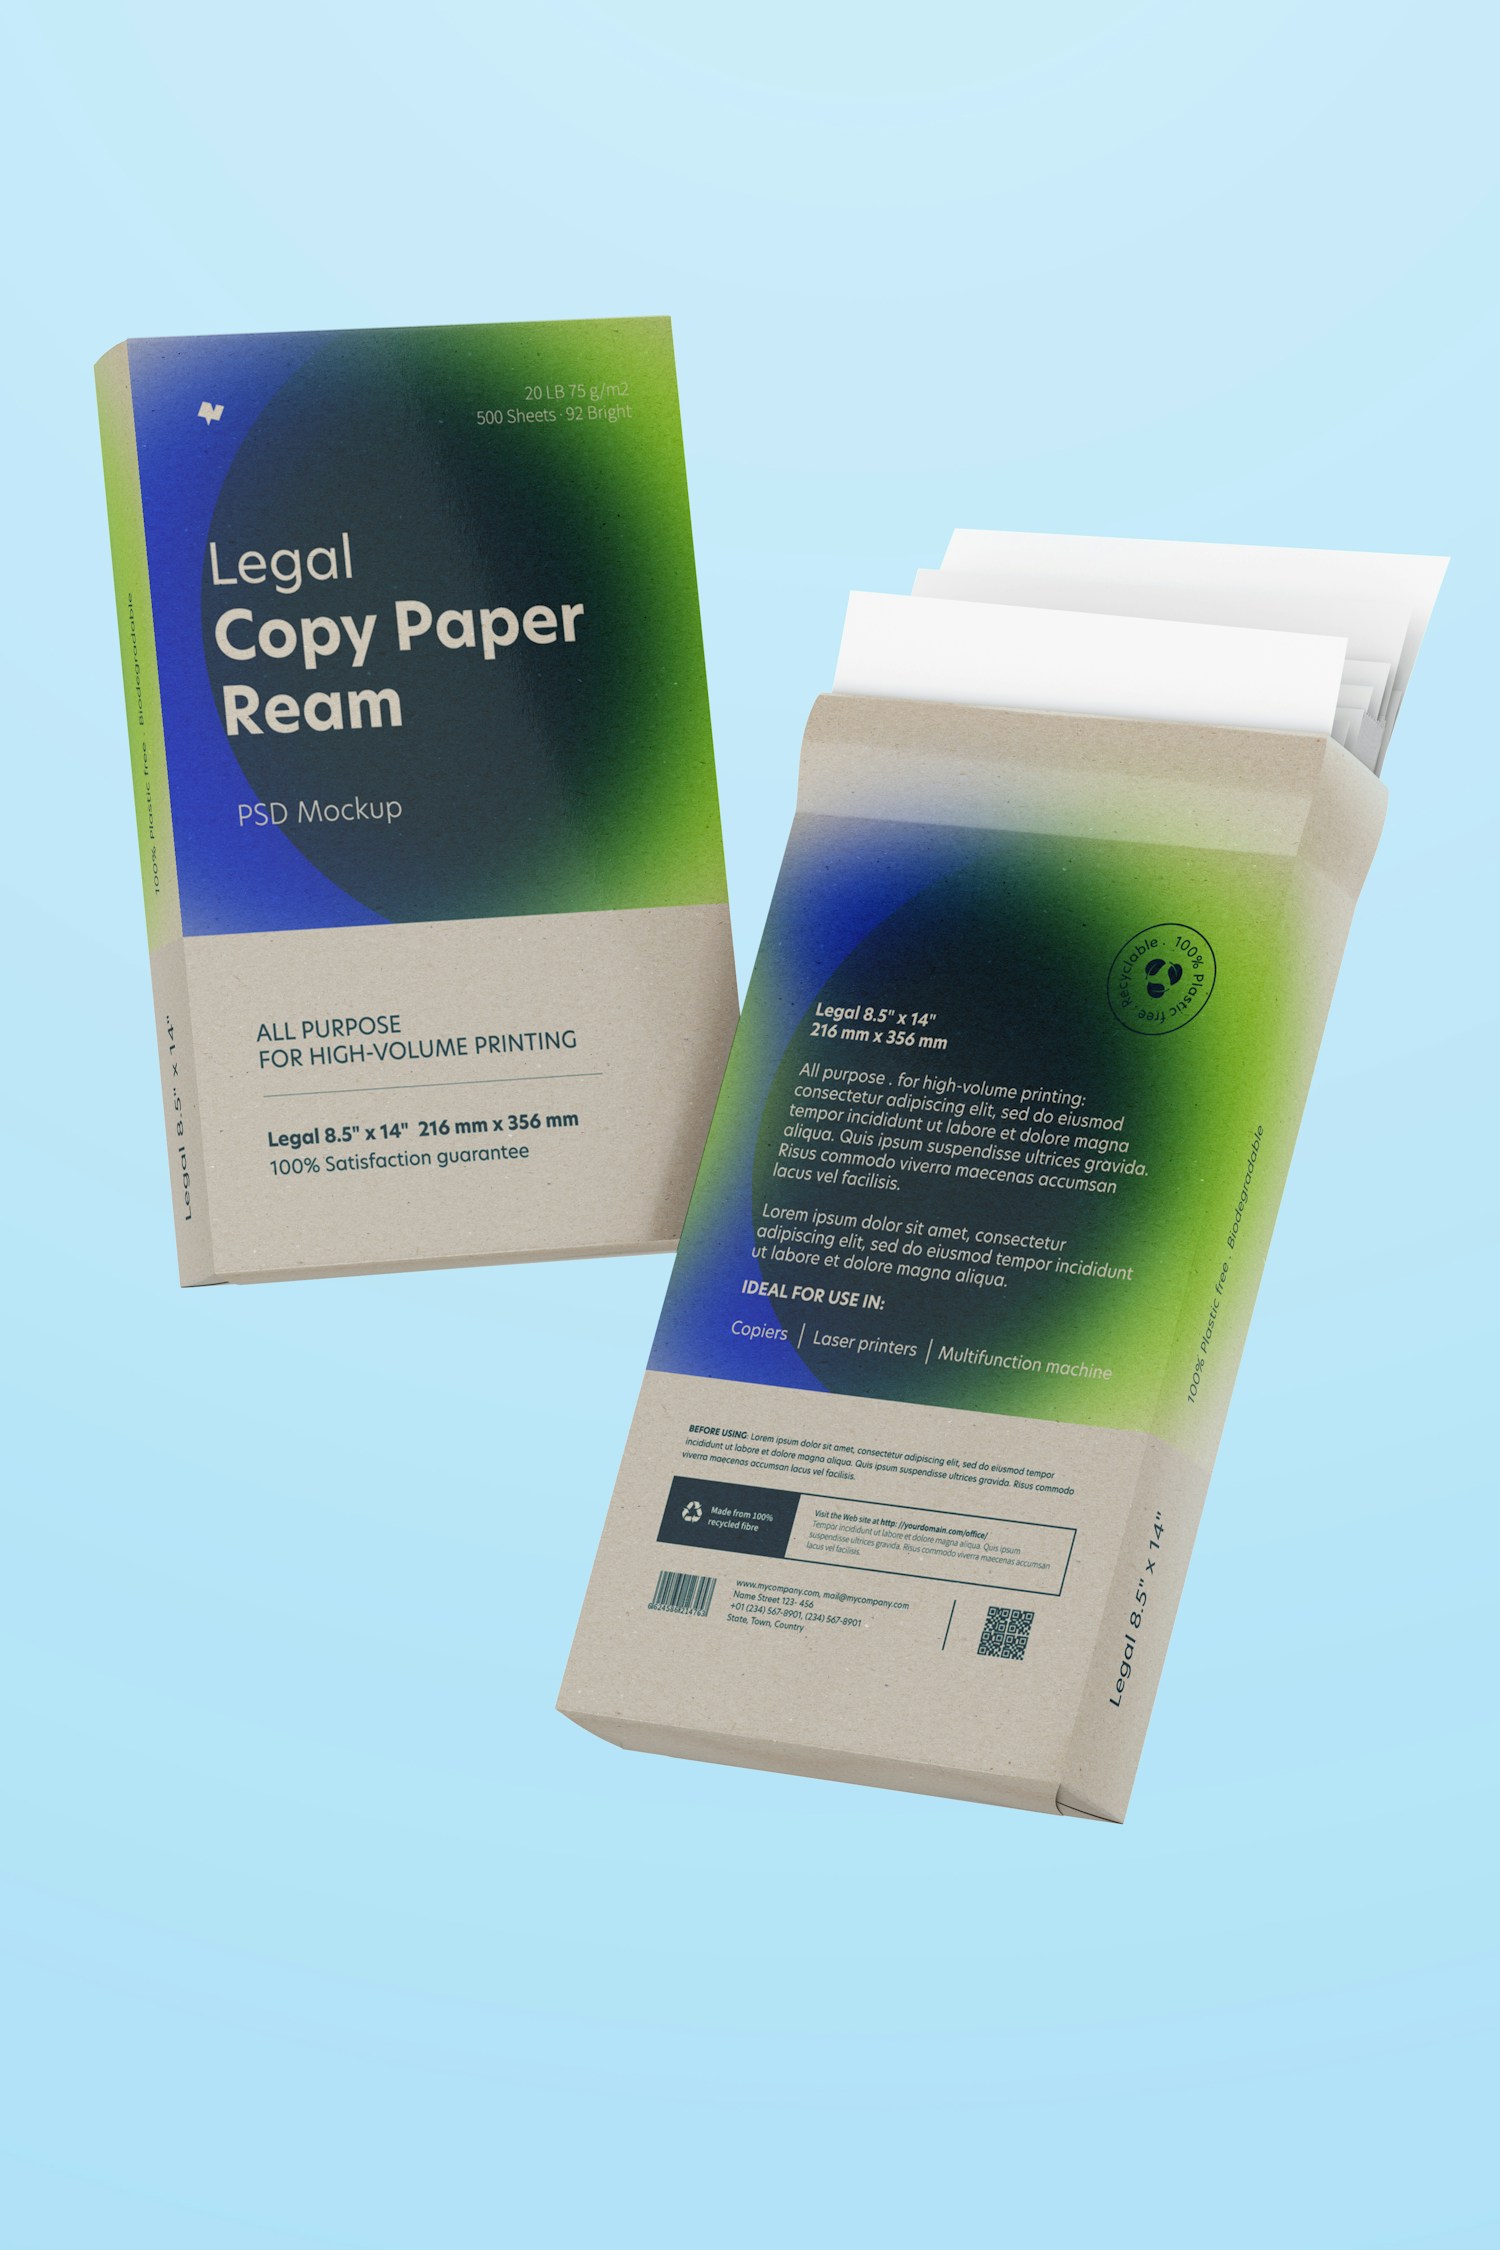 Legal Copy Paper Reams Mockup, Floating